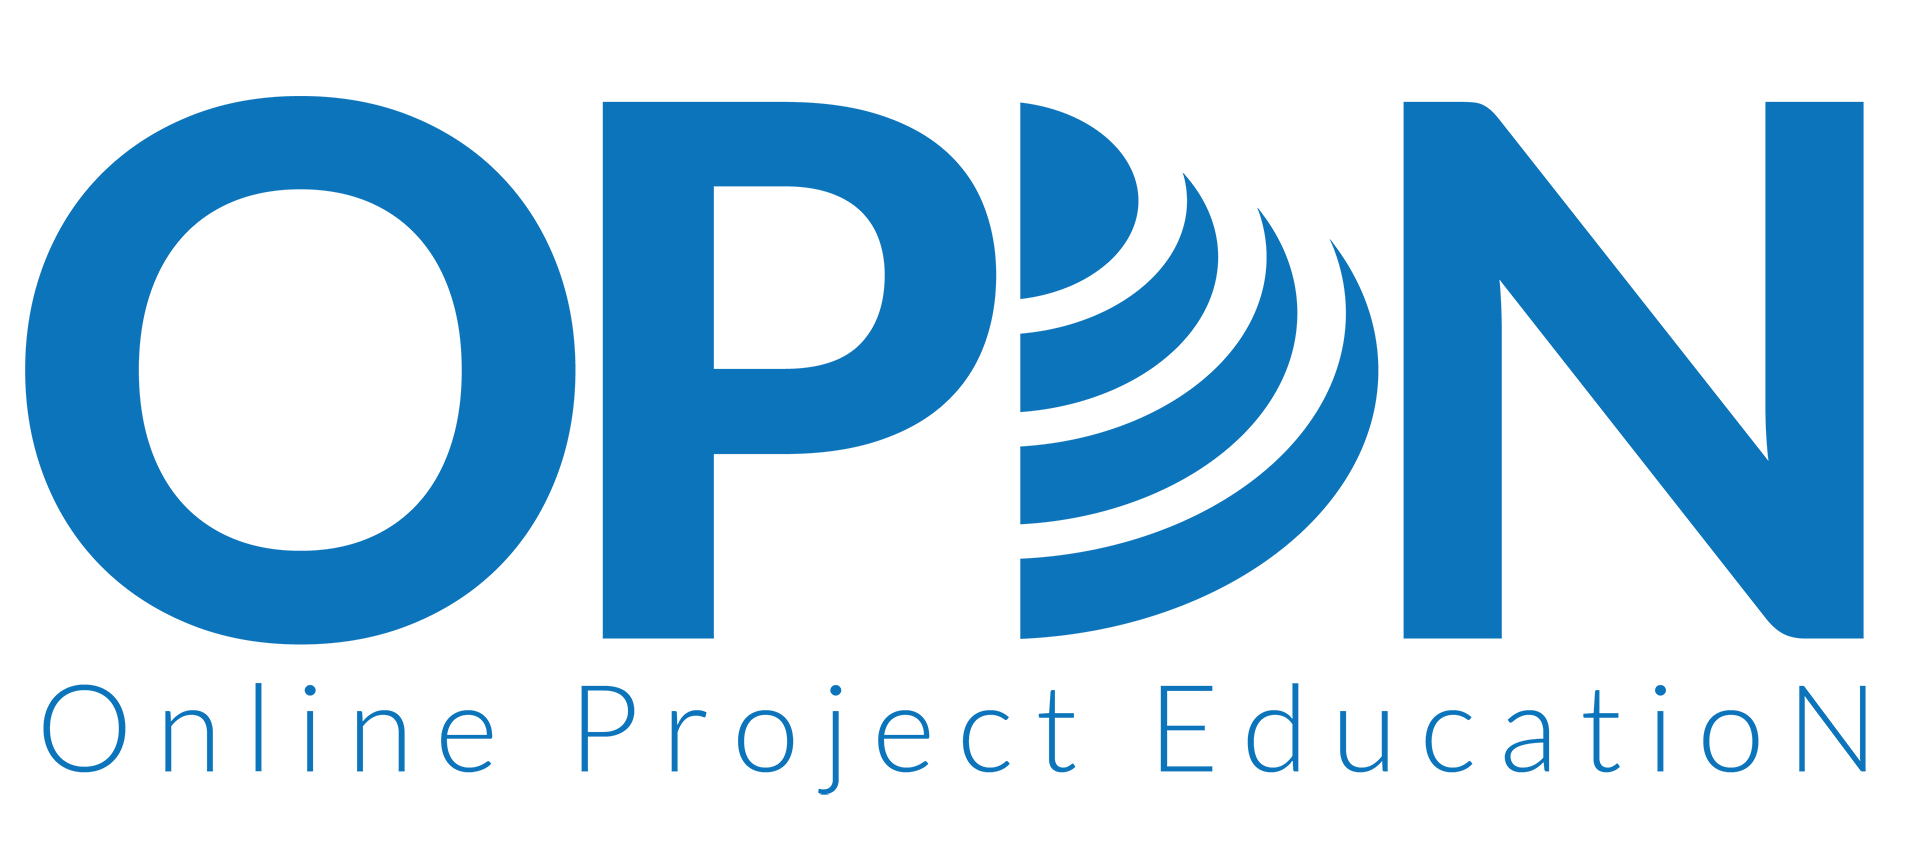 Online Project Education logo